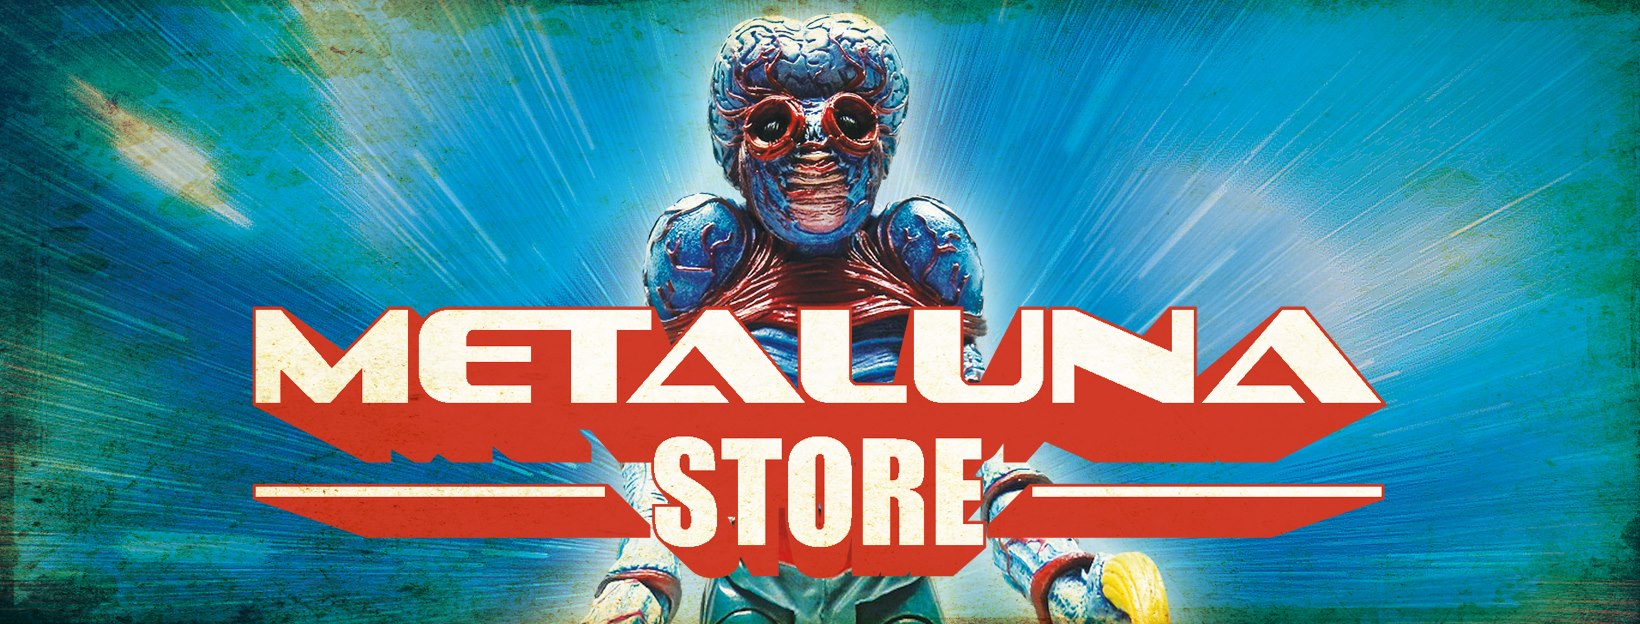 Metaluna Store Logo